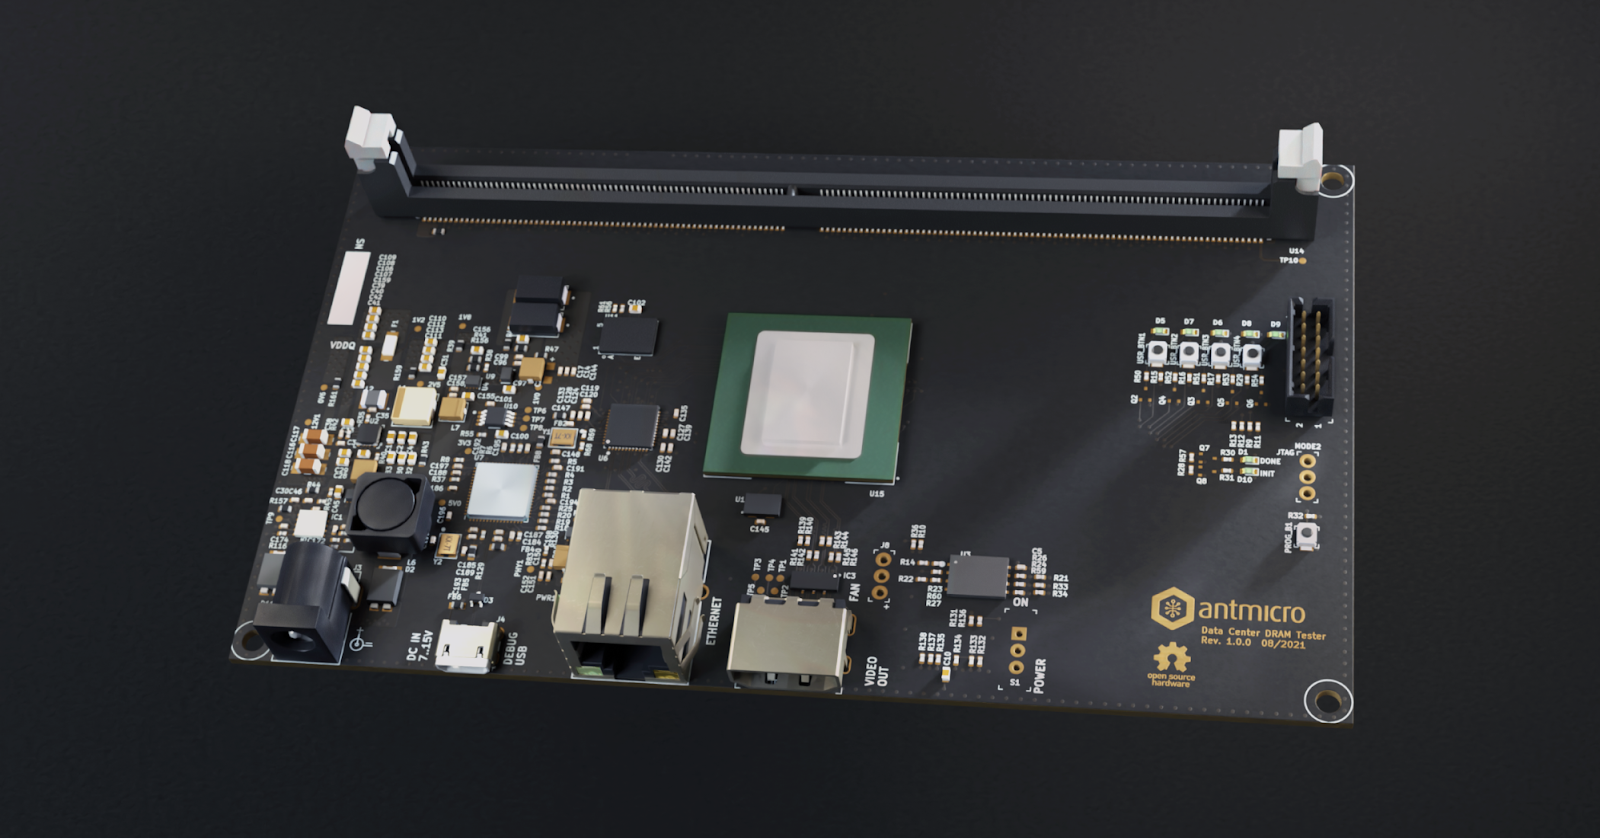 Photo of the Antmicro data center DRAM Xilinx Kintex-7 FPGA based tester board